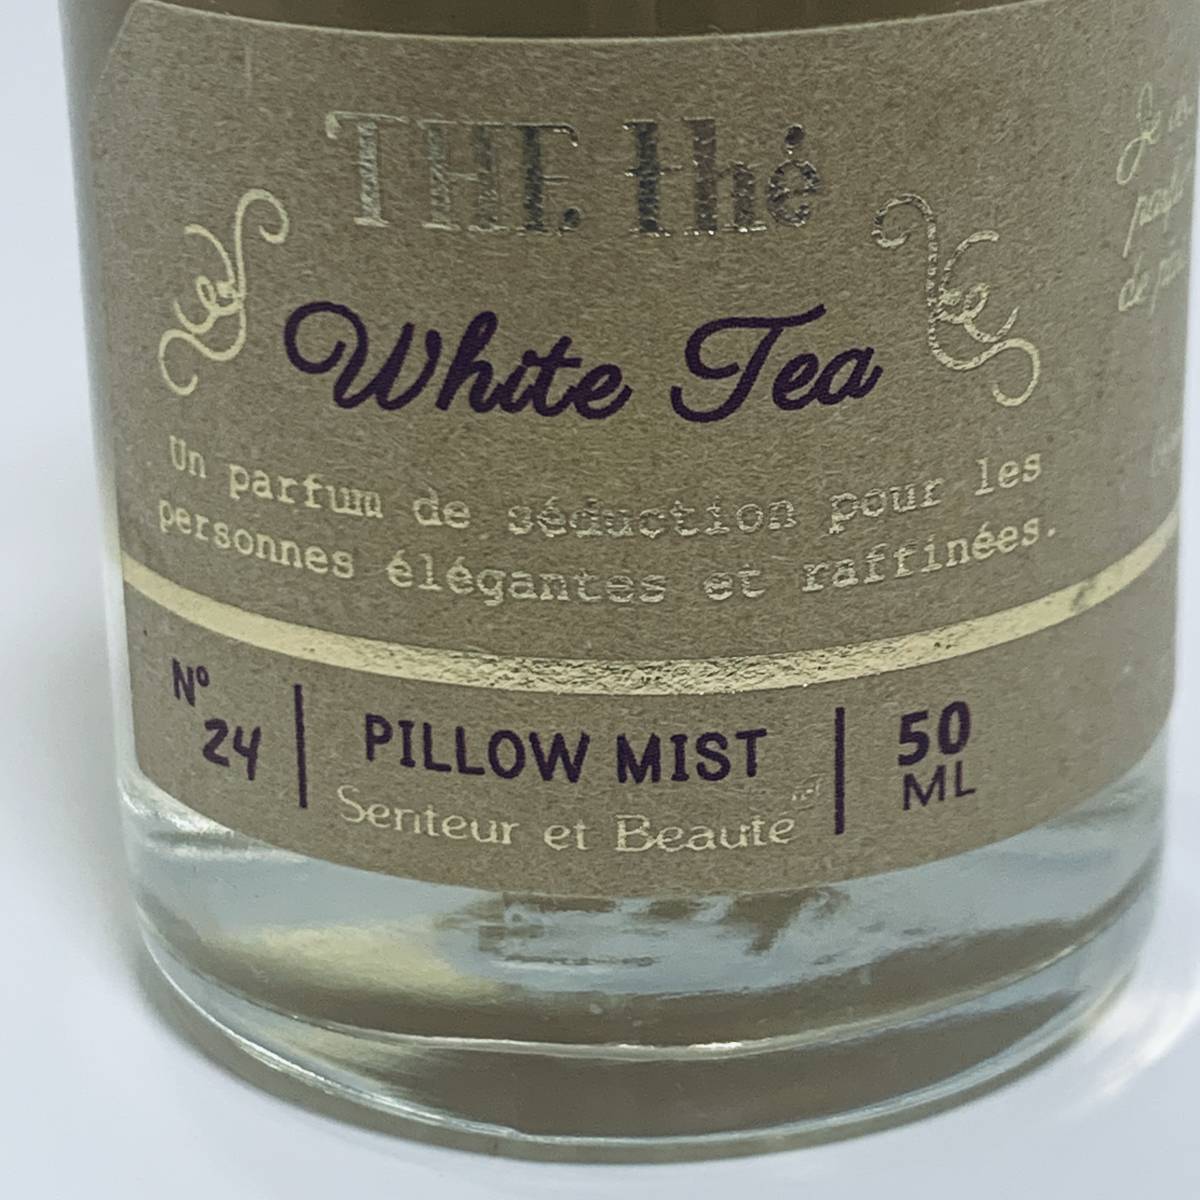 K0587 sun tar e Beaute pillow Mist white tea 50ml remainder amount perhaps 90%